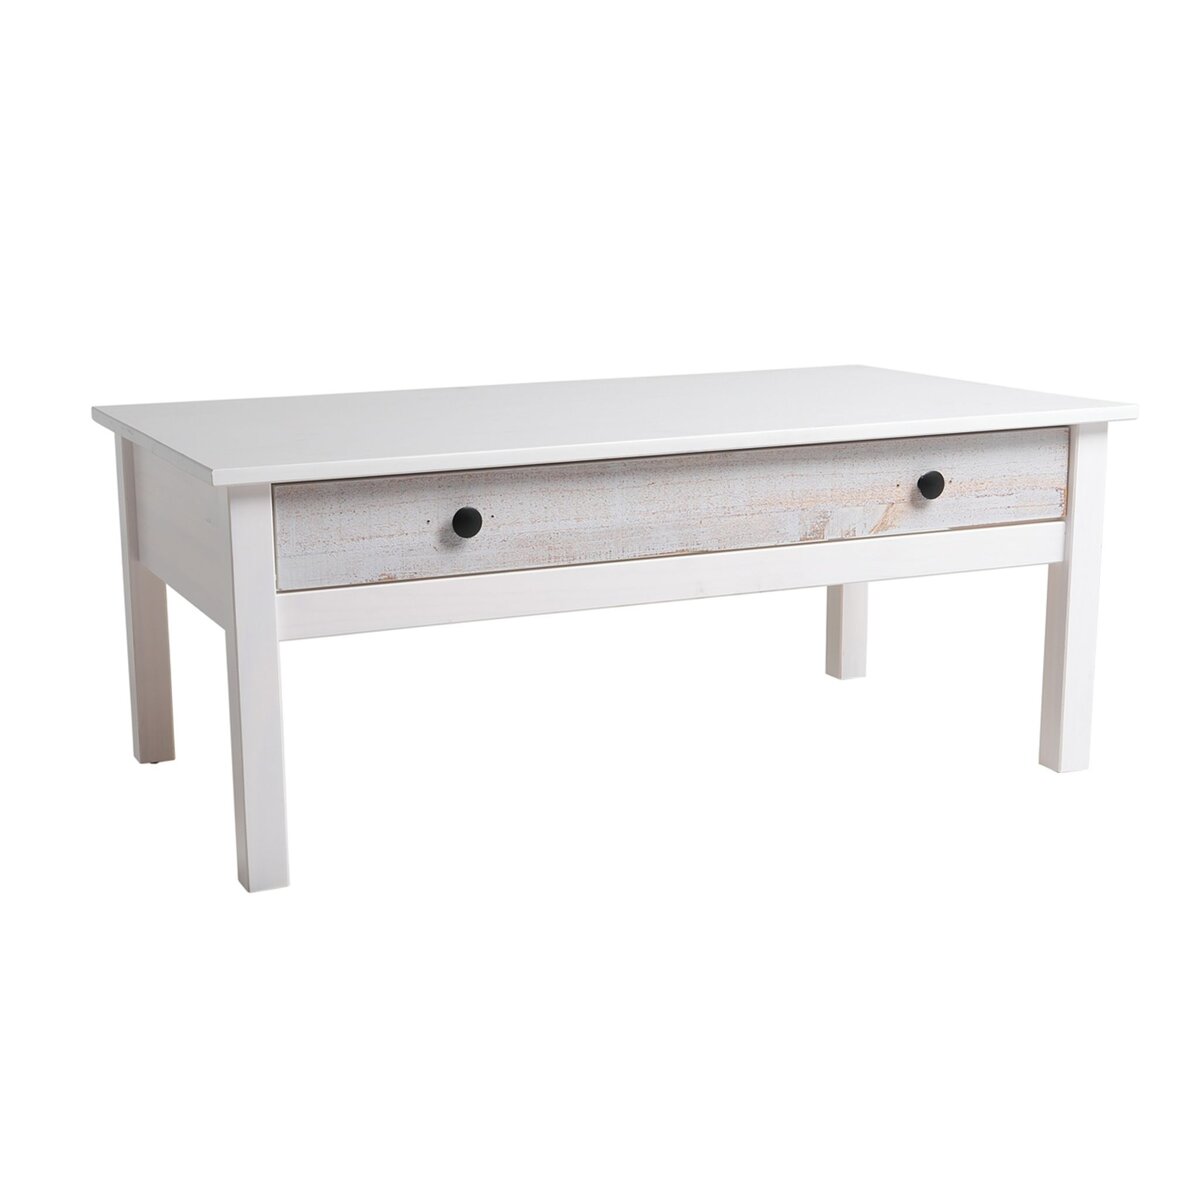 VS VENTA-STOCK Table basse rectangulaire blanche Magda, pin massif, 1 tiroir, 100 cm